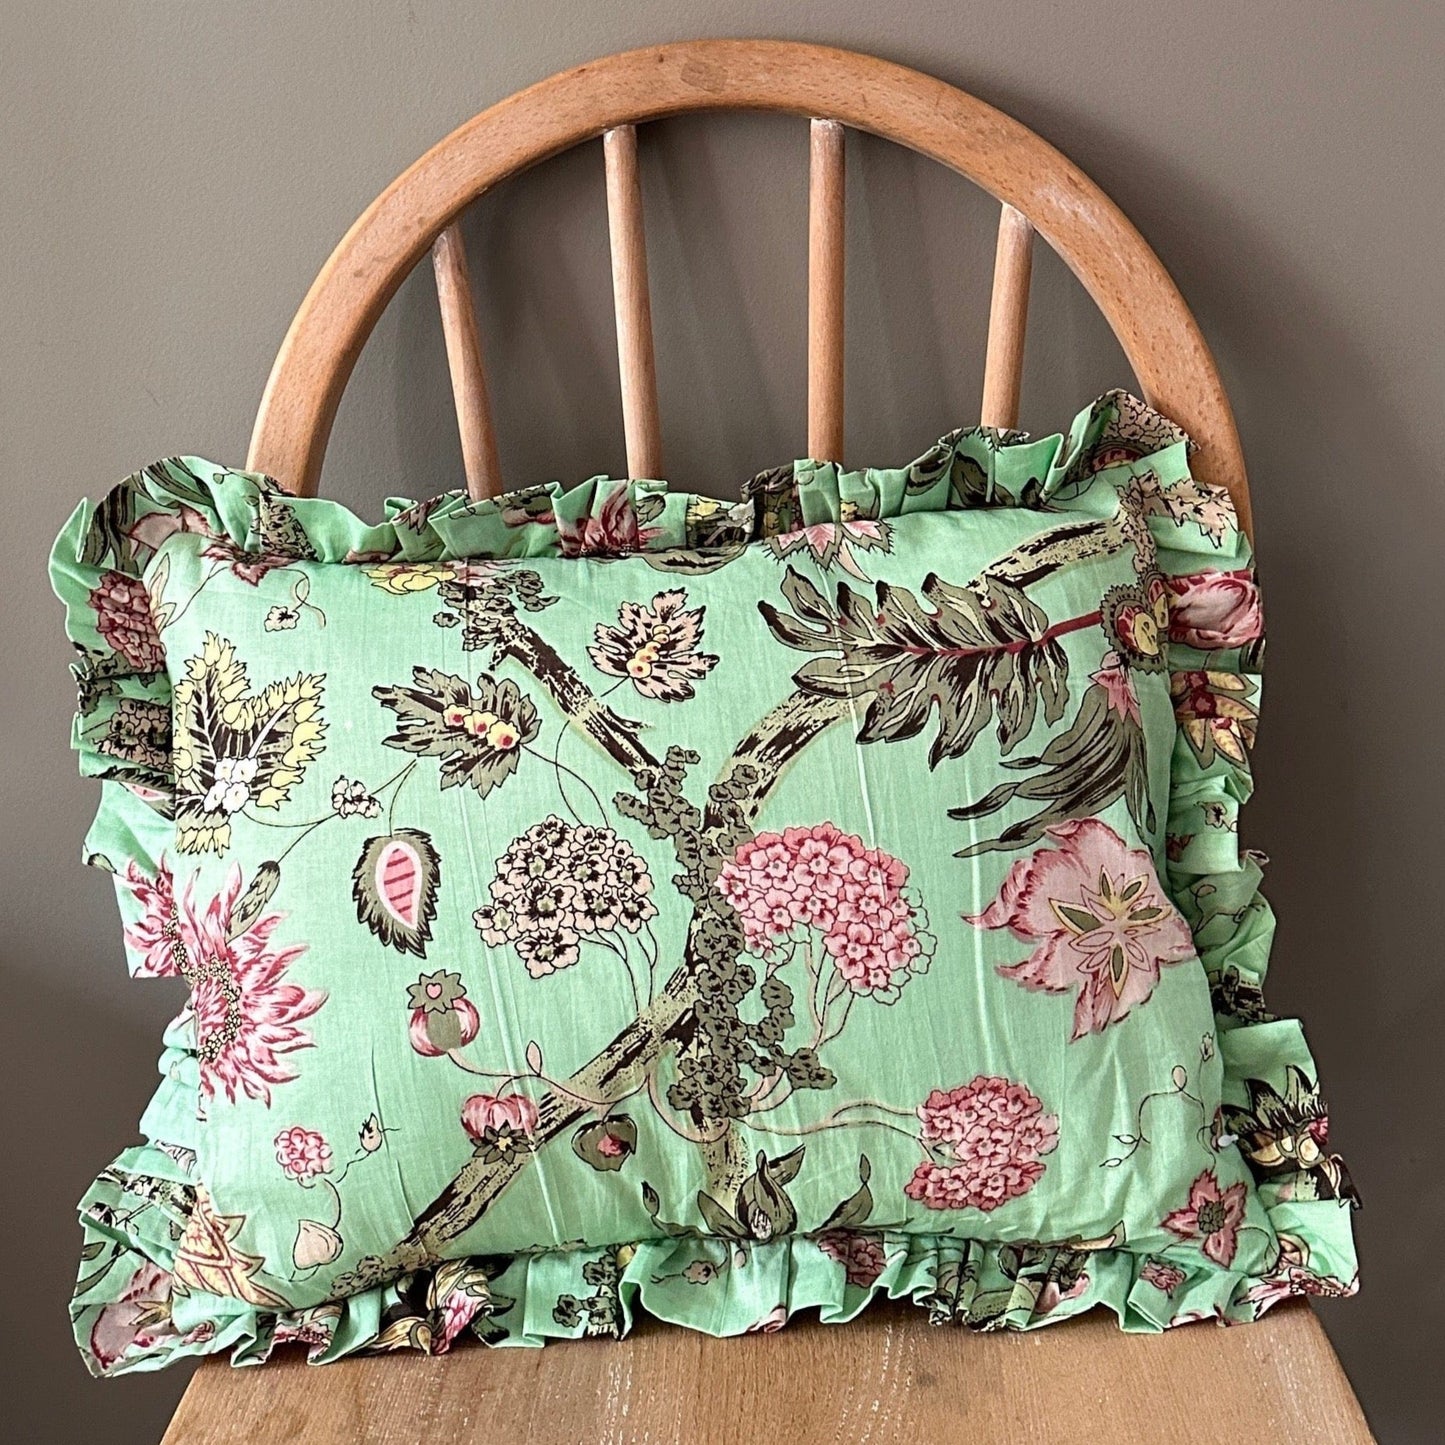 Cushions Ruffle Cushion - Pink Flowers on Mint 21497